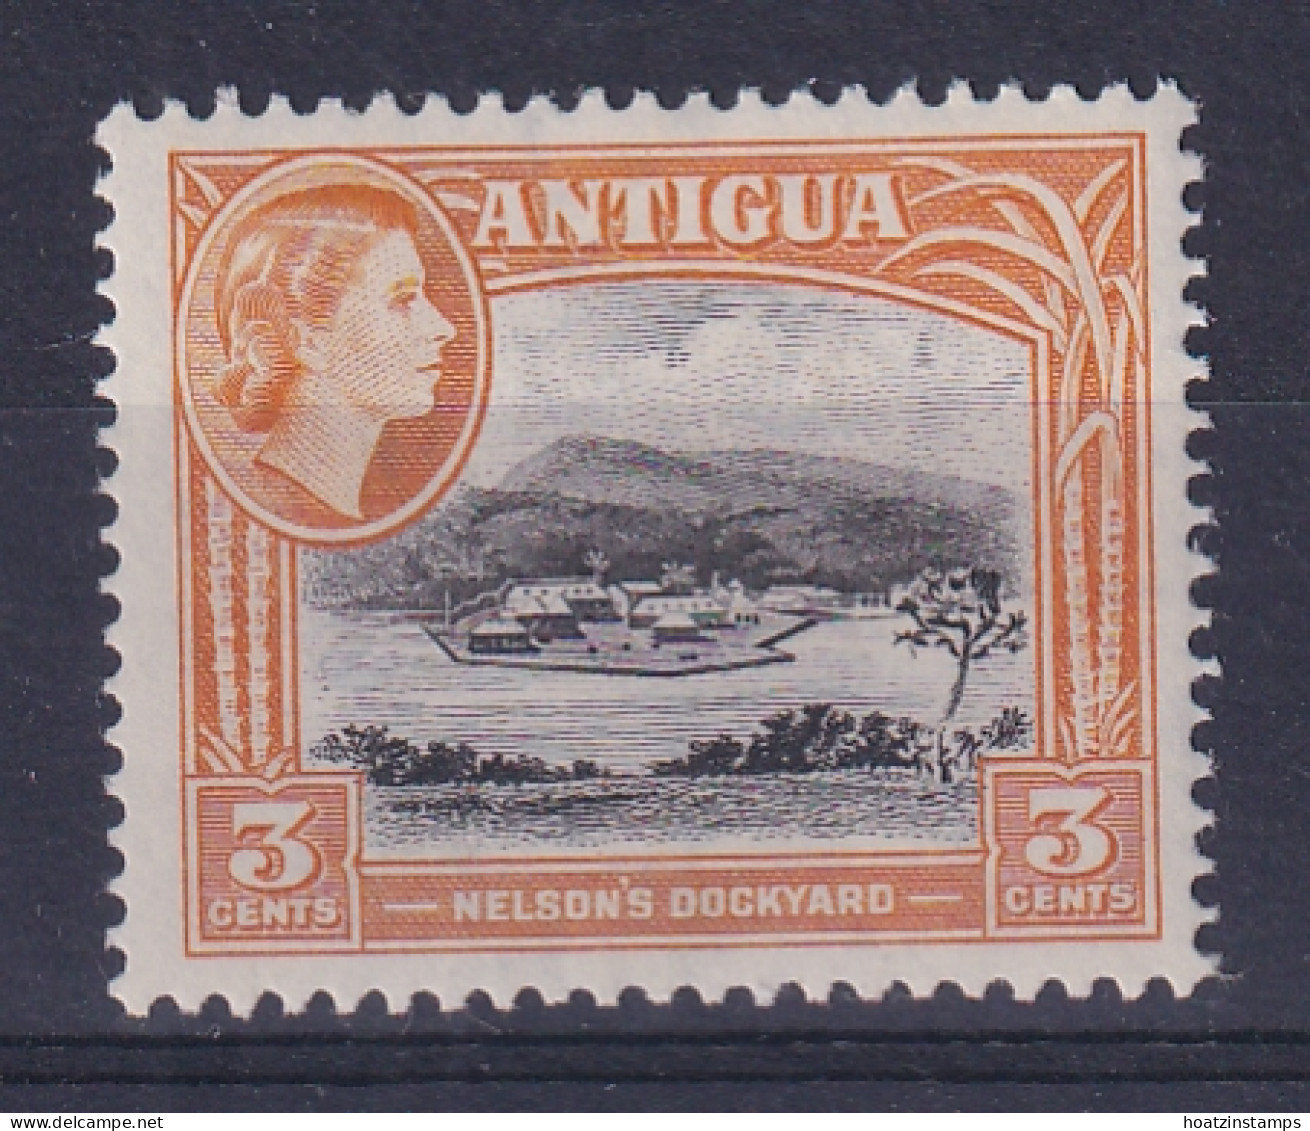 Antigua: 1963/65   QE II - Pictorial     SG152    3c   [Wmk: Block Crown CA]   MH - 1960-1981 Autonomia Interna